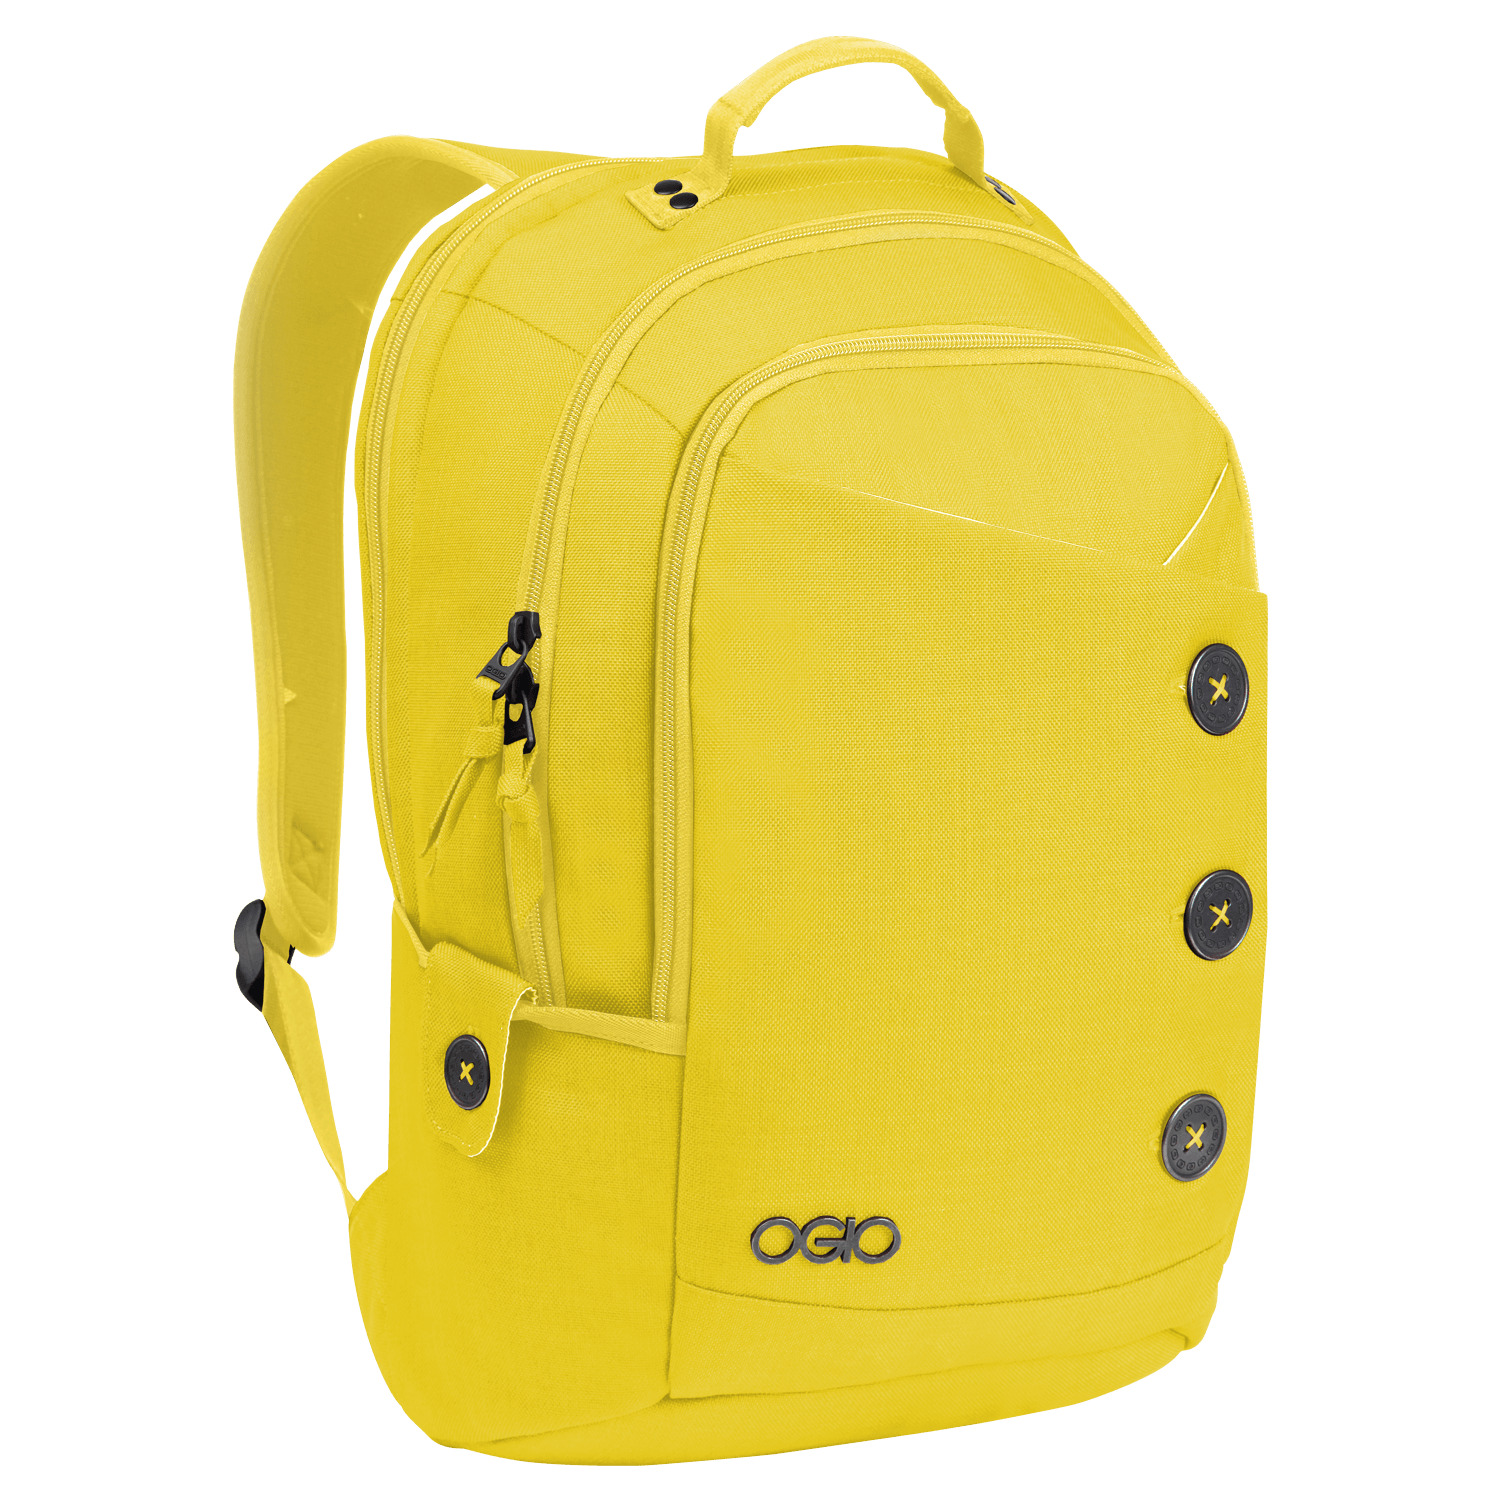 Ogio Yellow Backpack icons